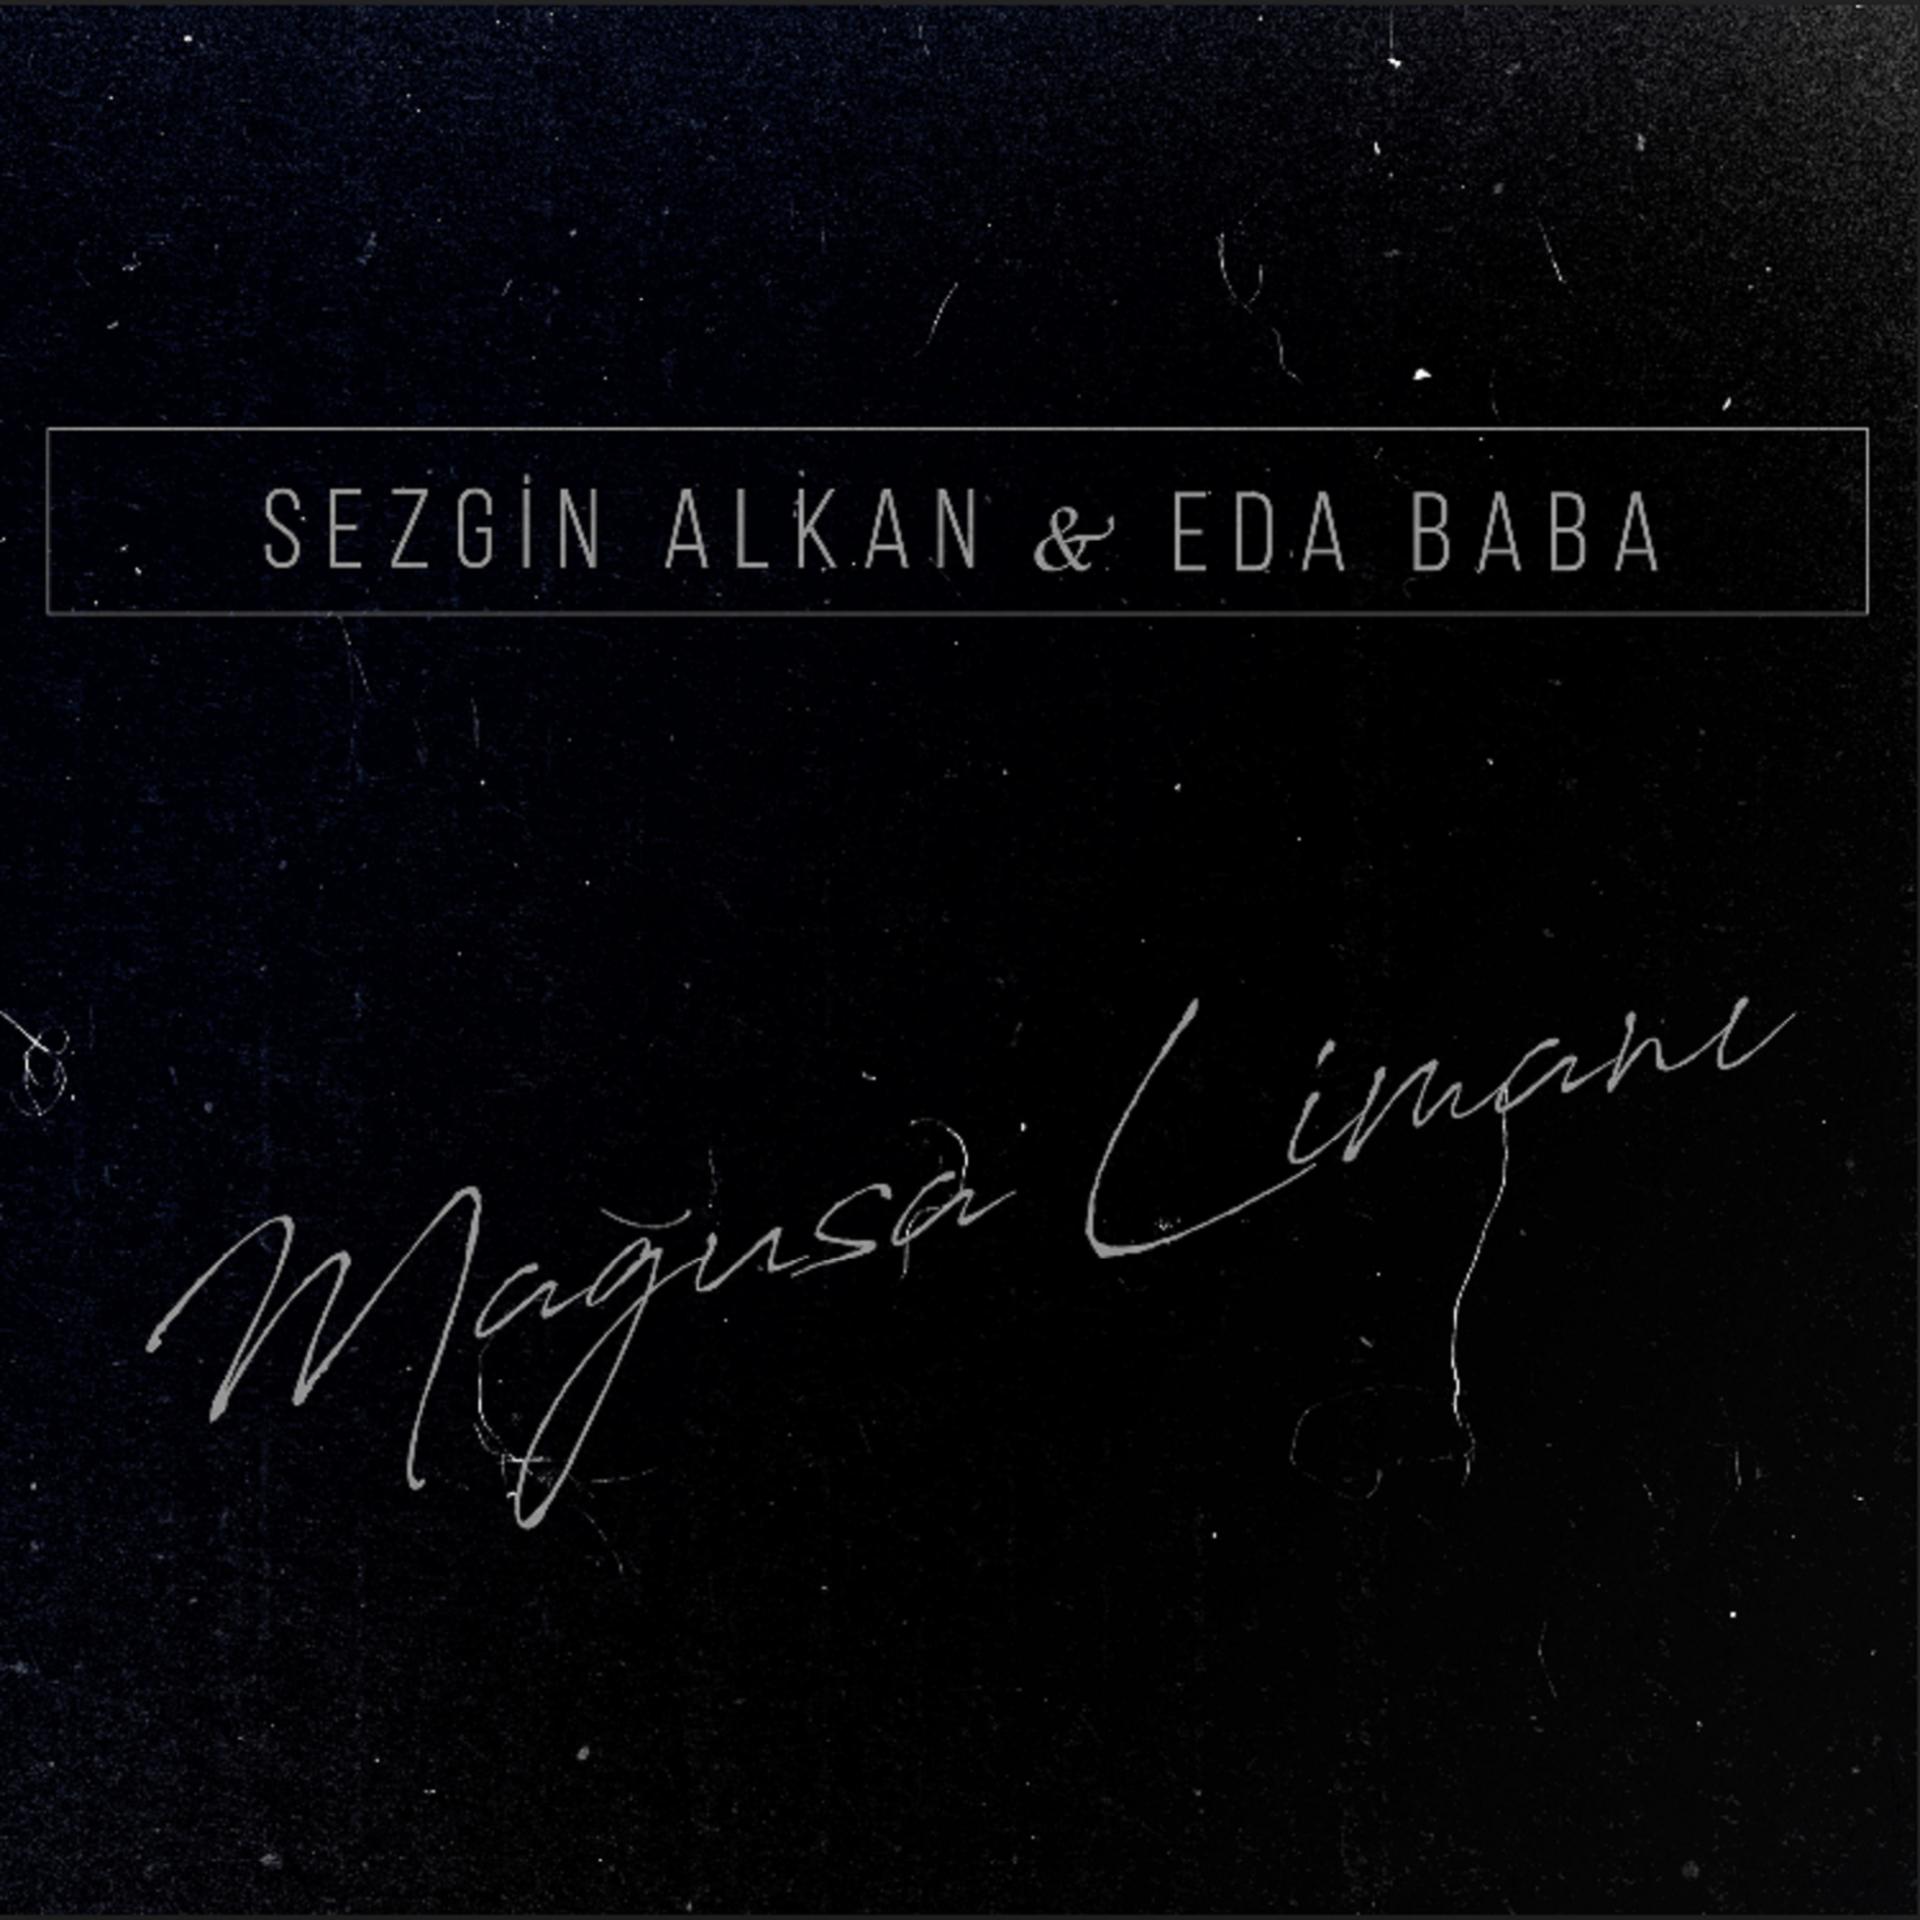 Постер альбома Mağusa Limanı